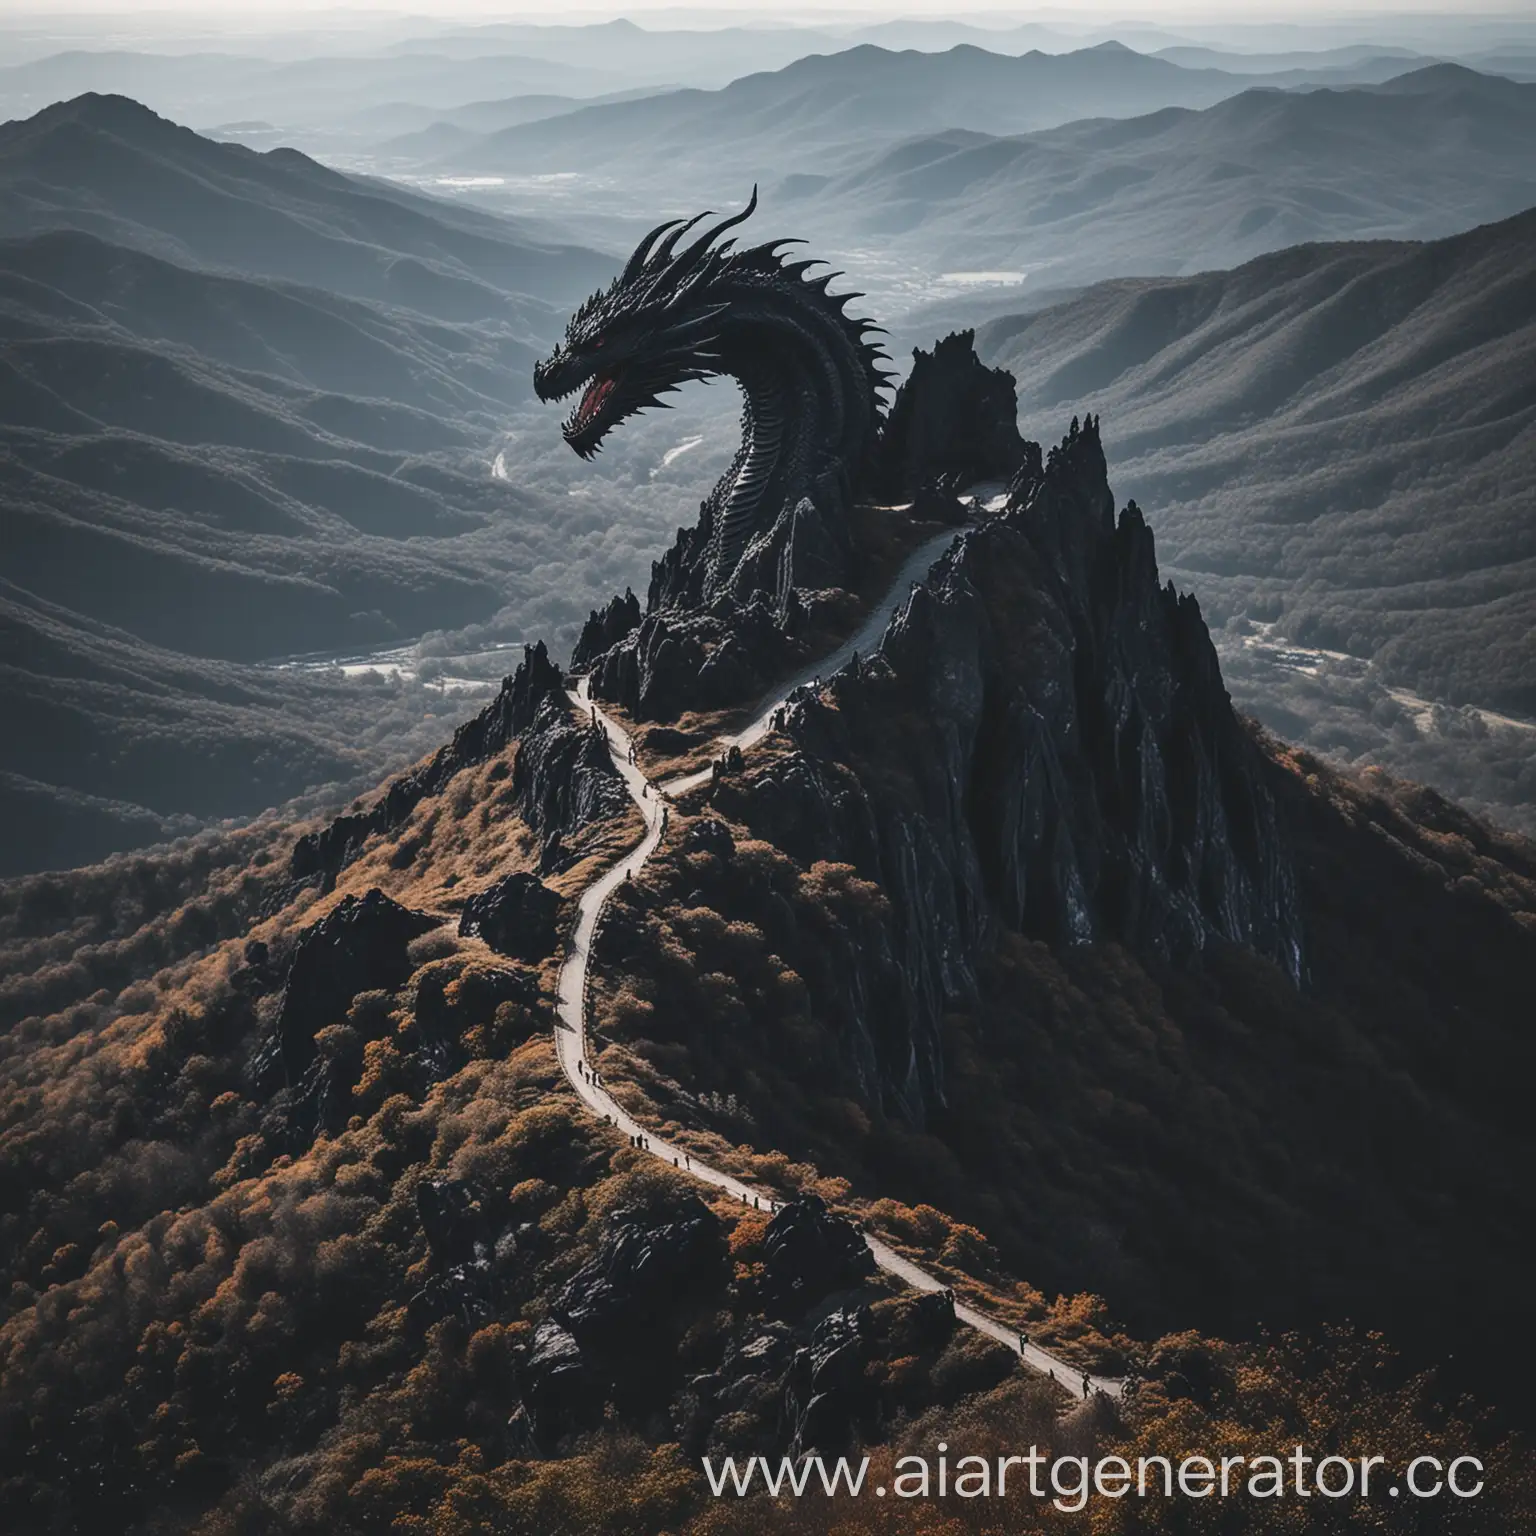 Majestic-Dragonshaped-Black-Mountain-Landscape